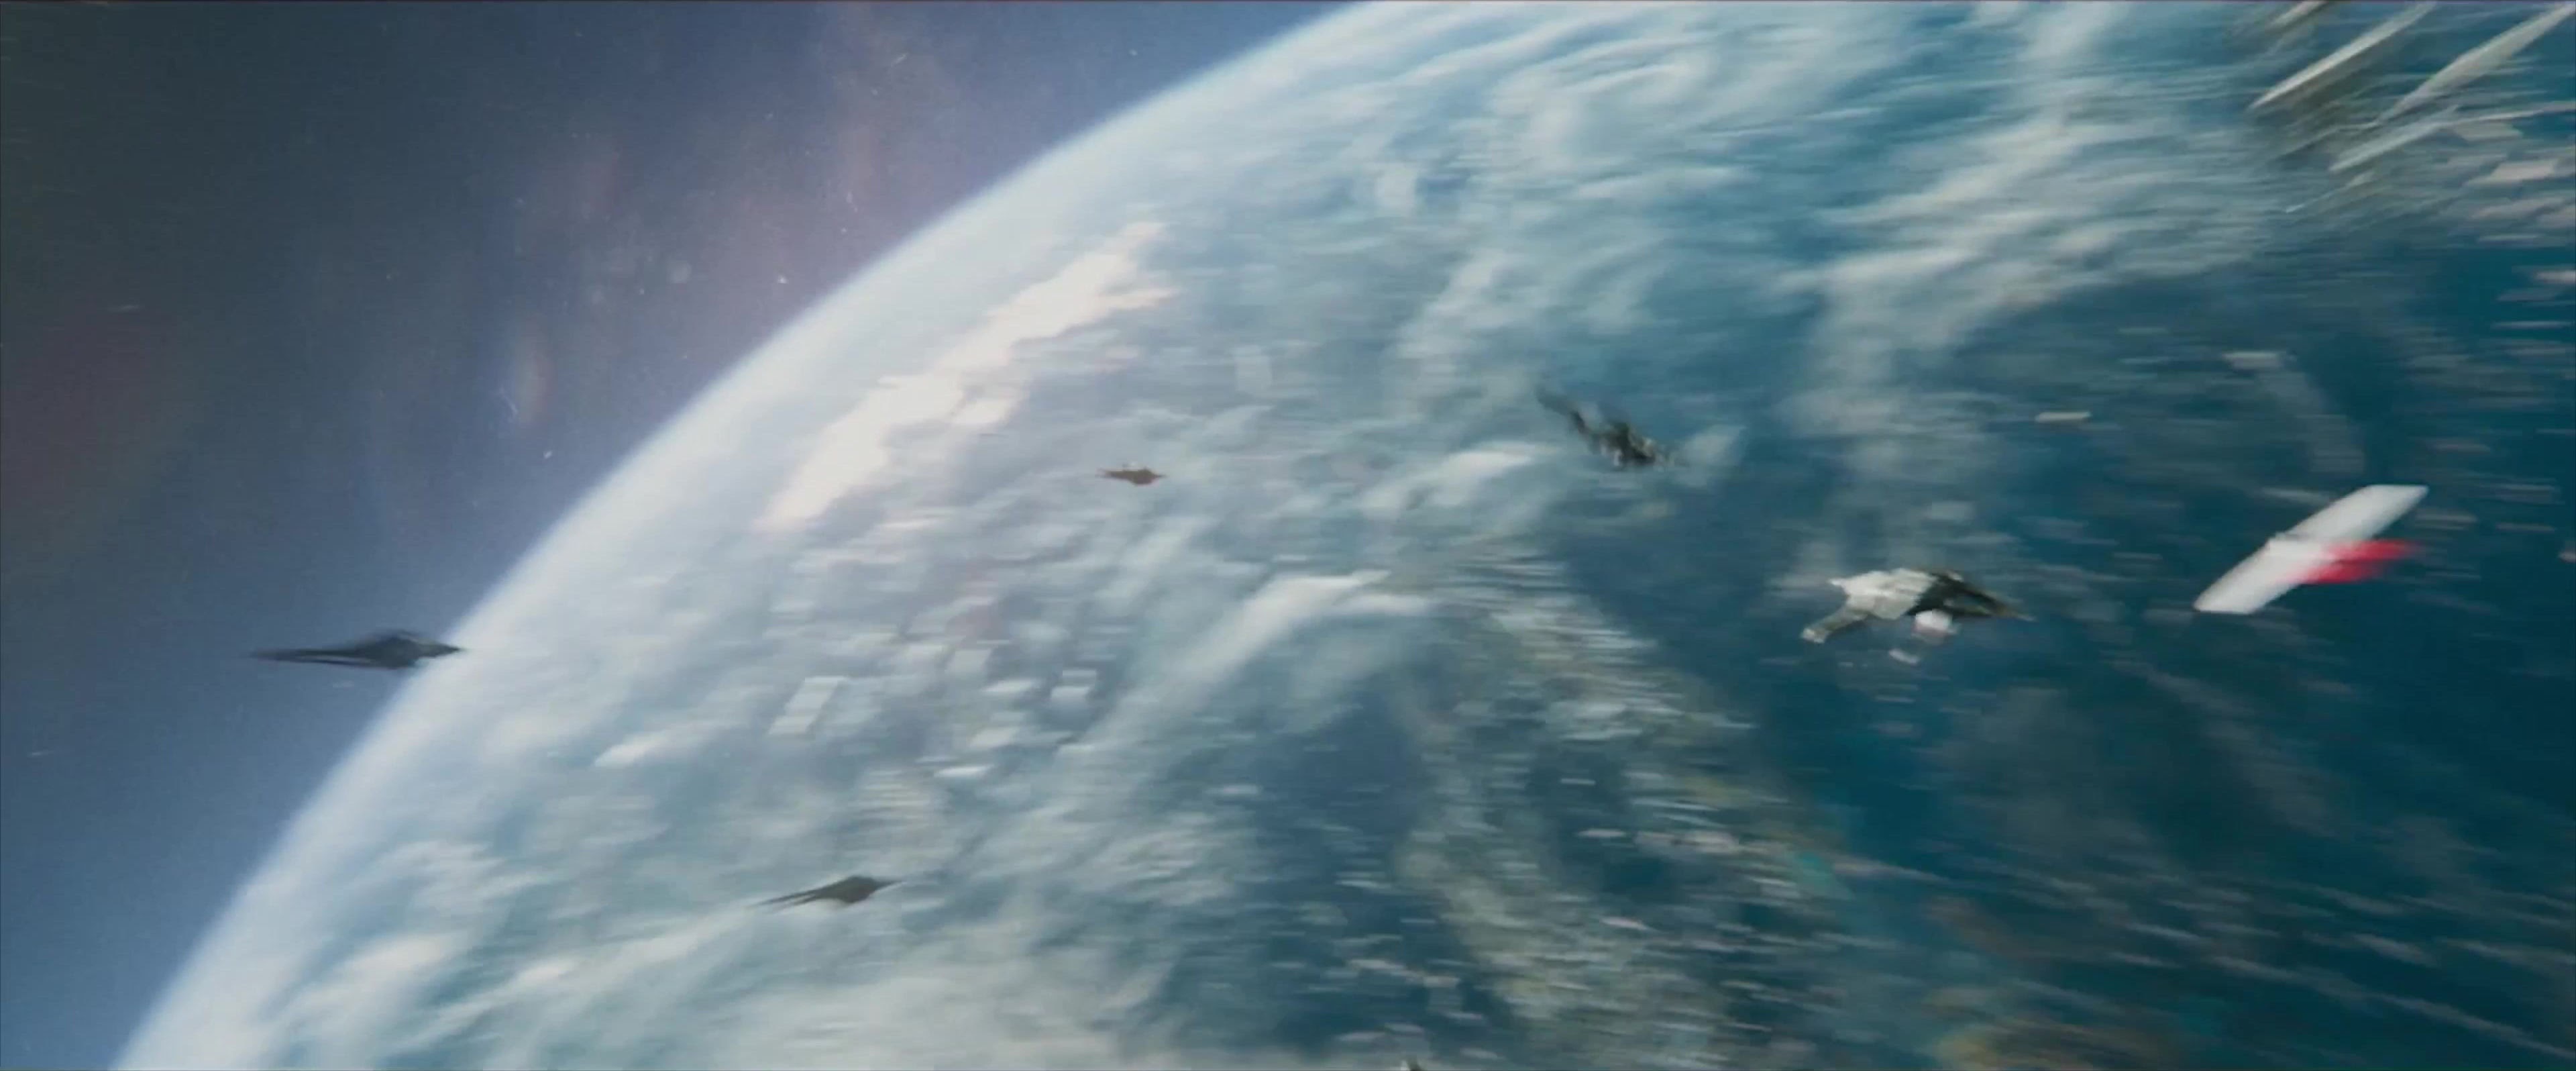 The Trek Collective: Star Trek Beyond trailer 2, shot by shot